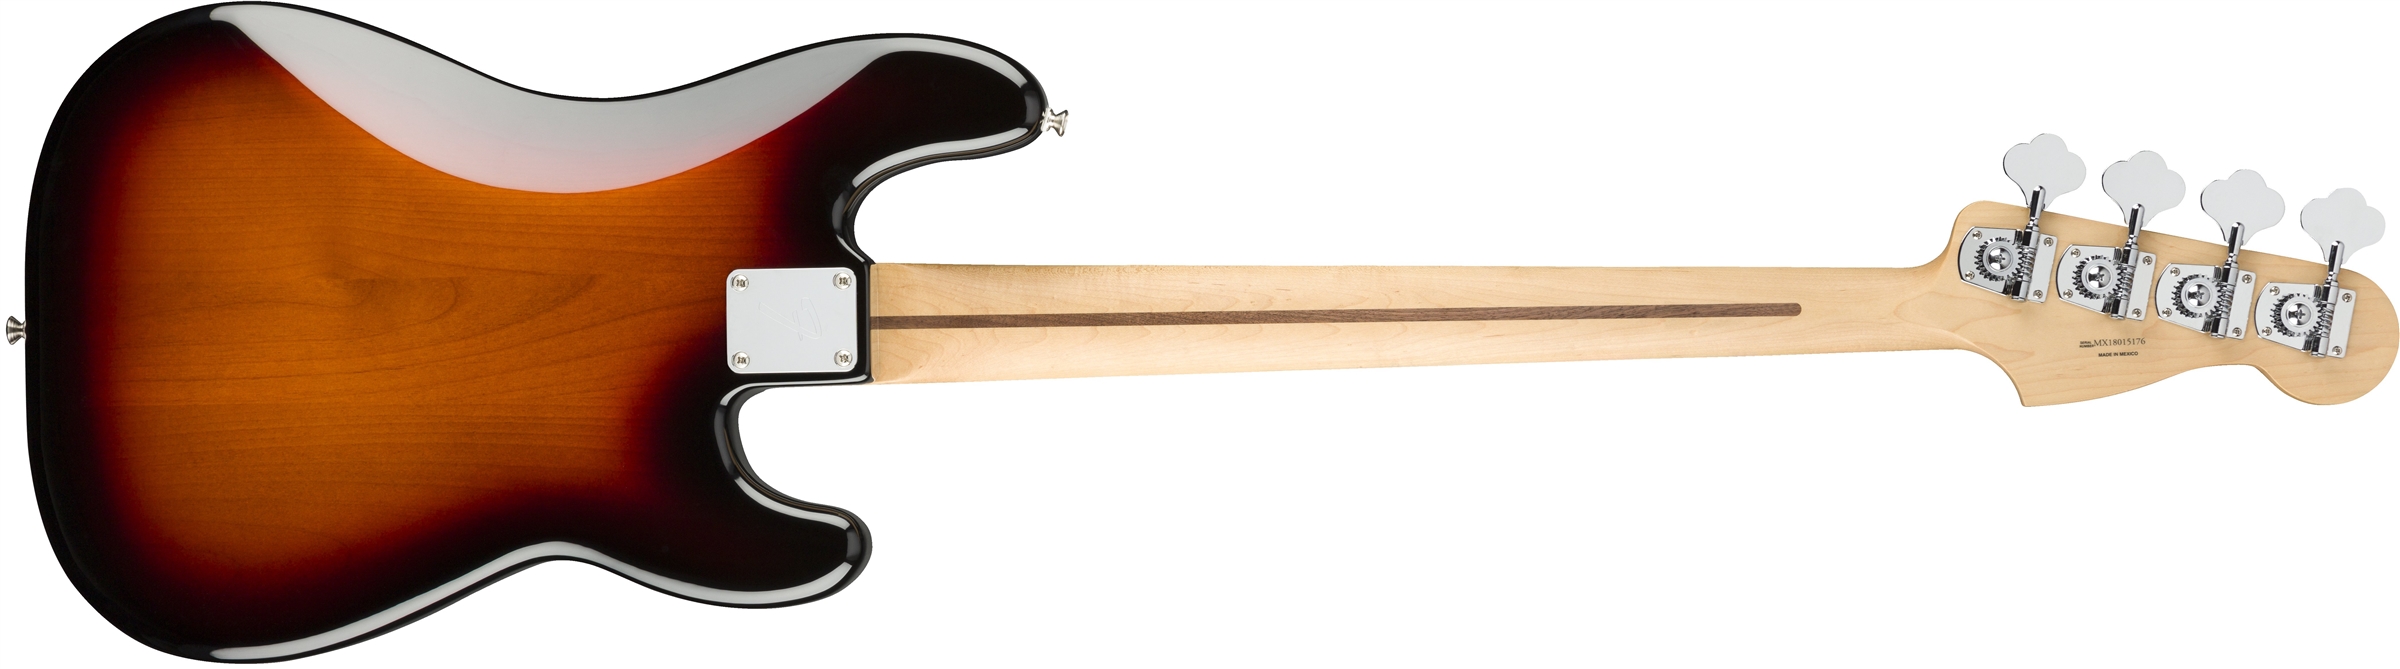 Fender Precision Bass Player Lh Gaucher Mex Pf - 3-color Sunburst - Bajo eléctrico de cuerpo sólido - Variation 1